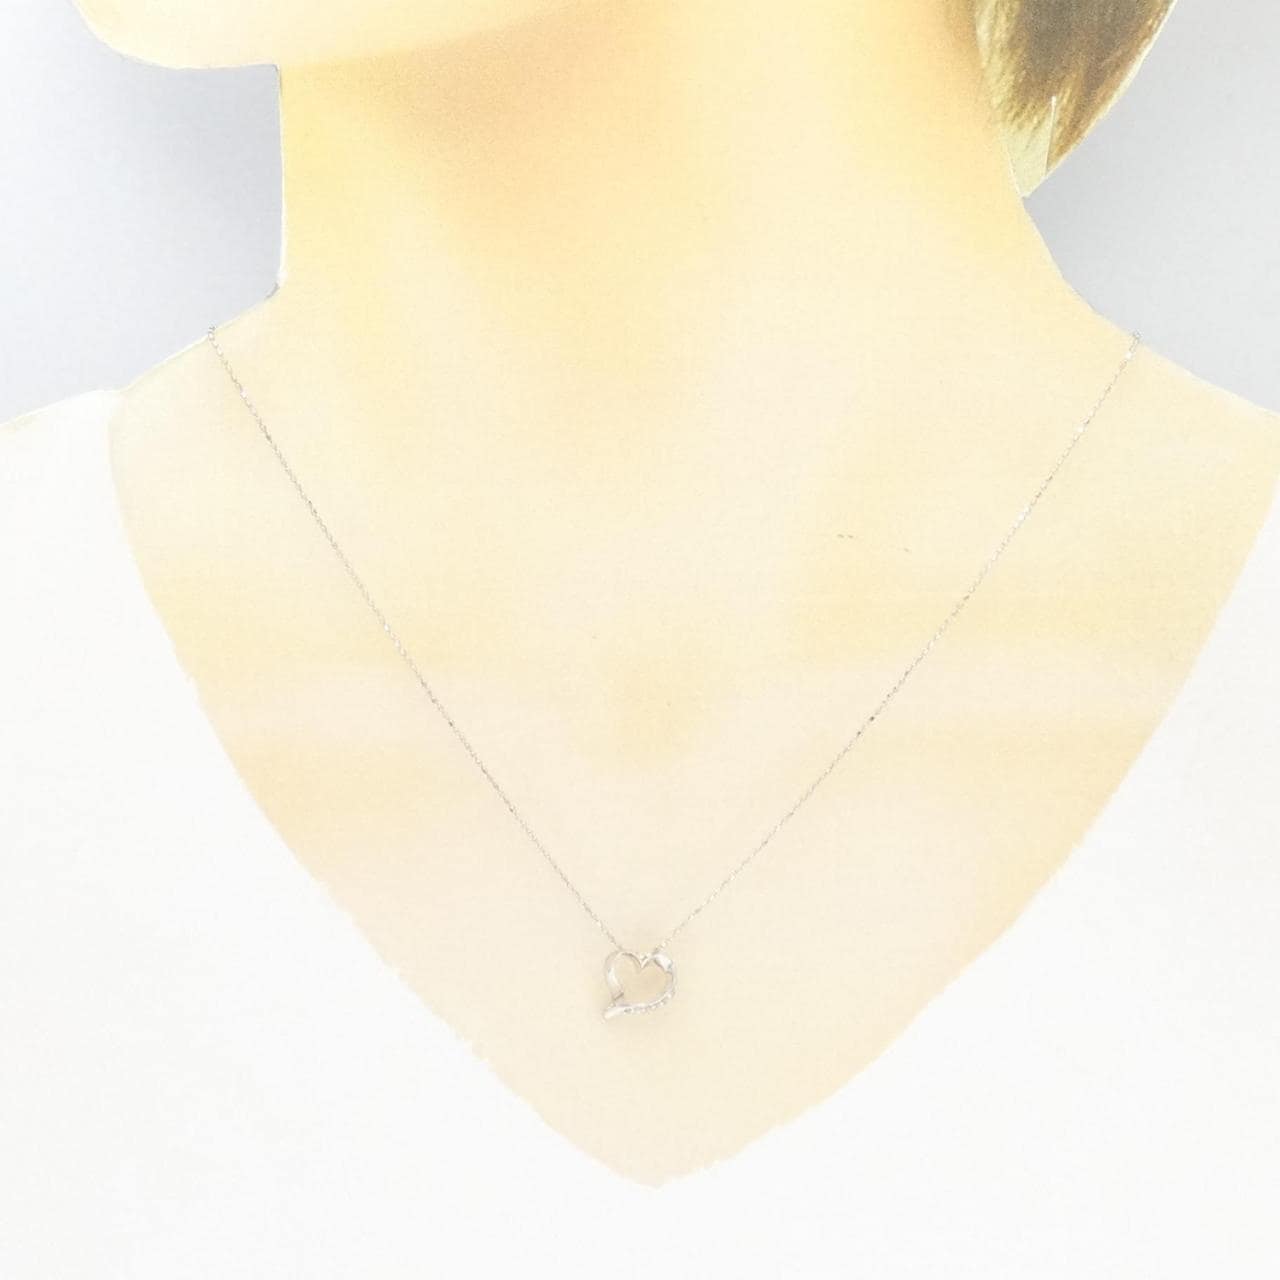 K18WG heart Diamond necklace 0.07CT